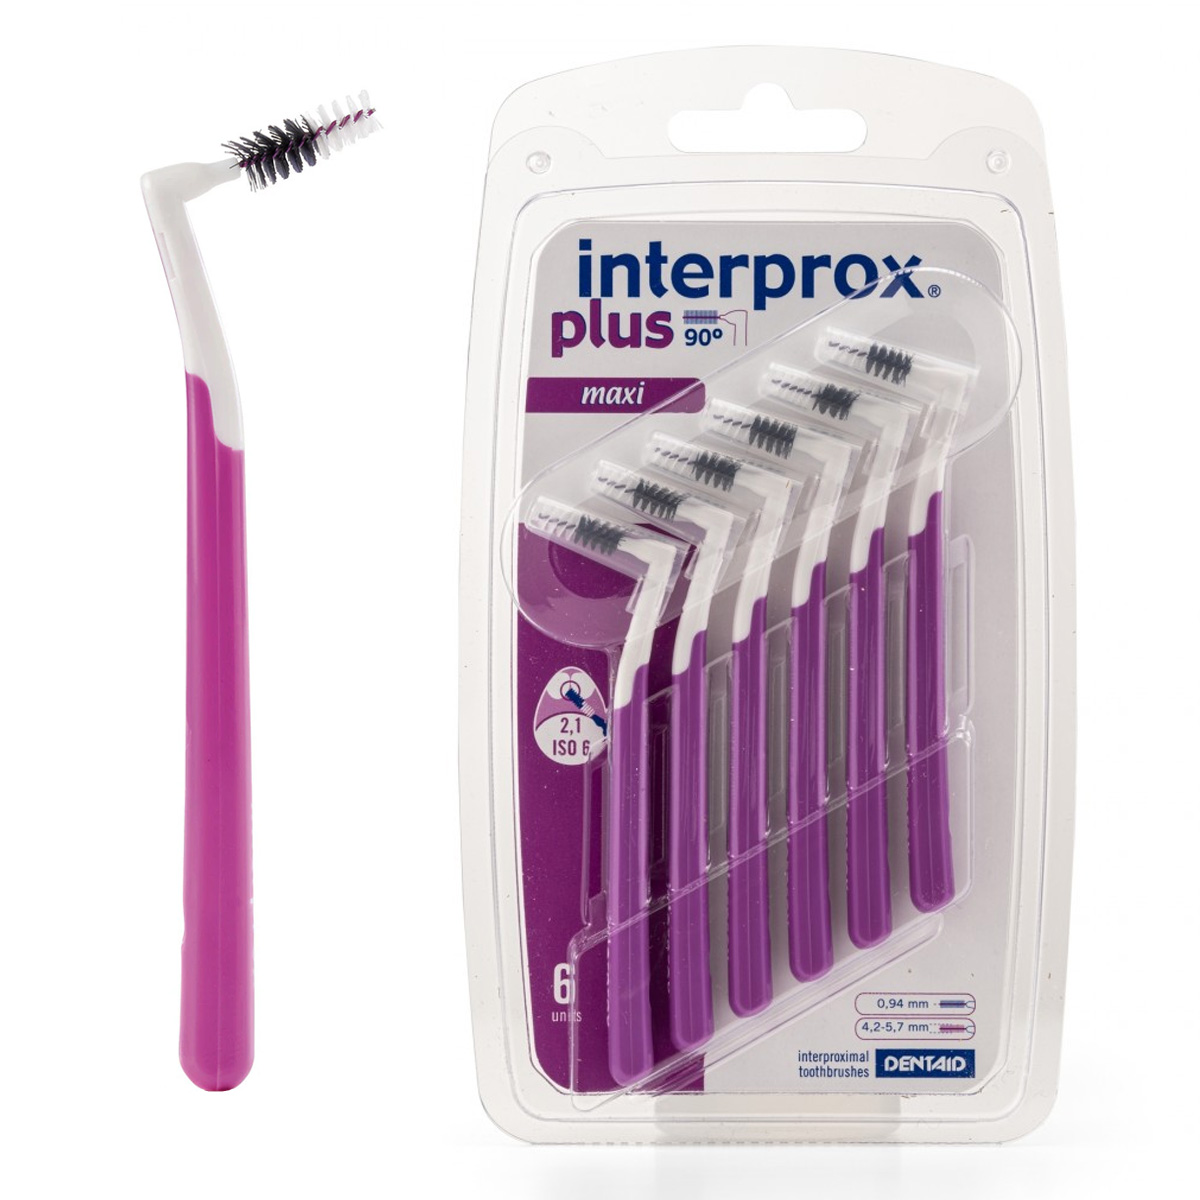 Межзубный ершик Interprox Interprox Plus Maxi 2.1 мм межзубный ершик interprox interprox plus nano 0 6 мм